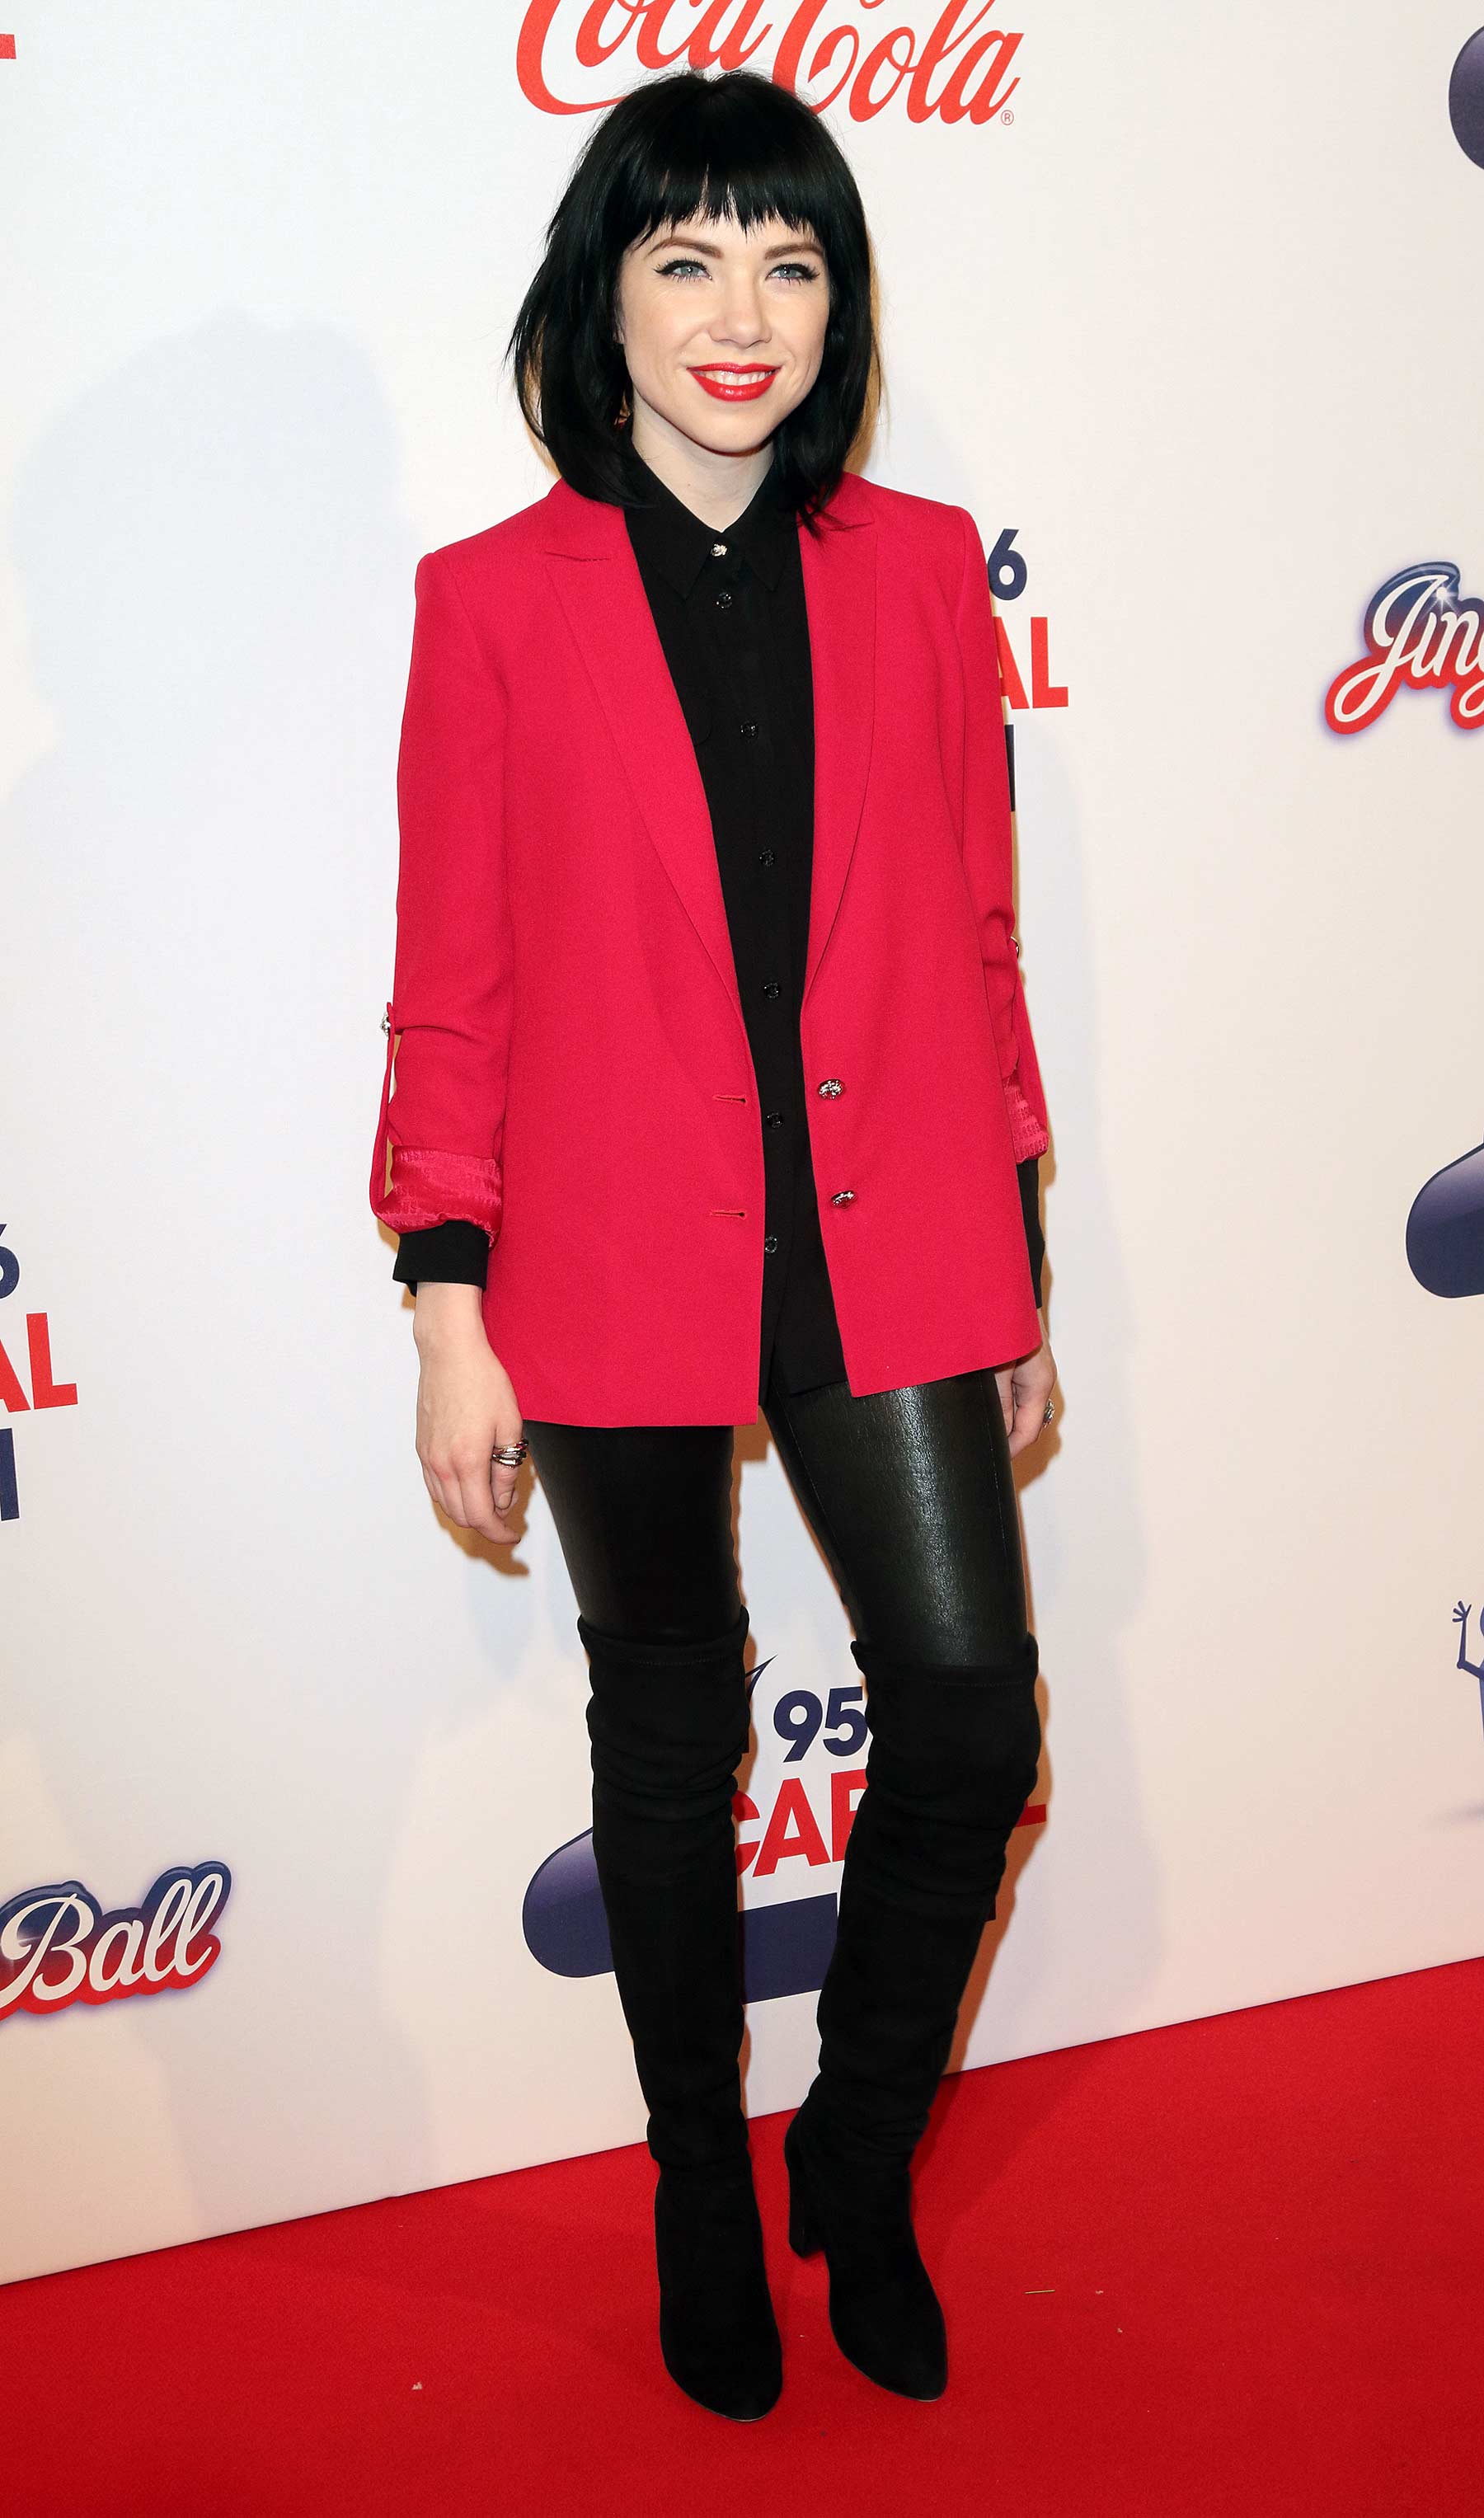 Carly Rae Jepsen attends Jingle Bell Ball 2015